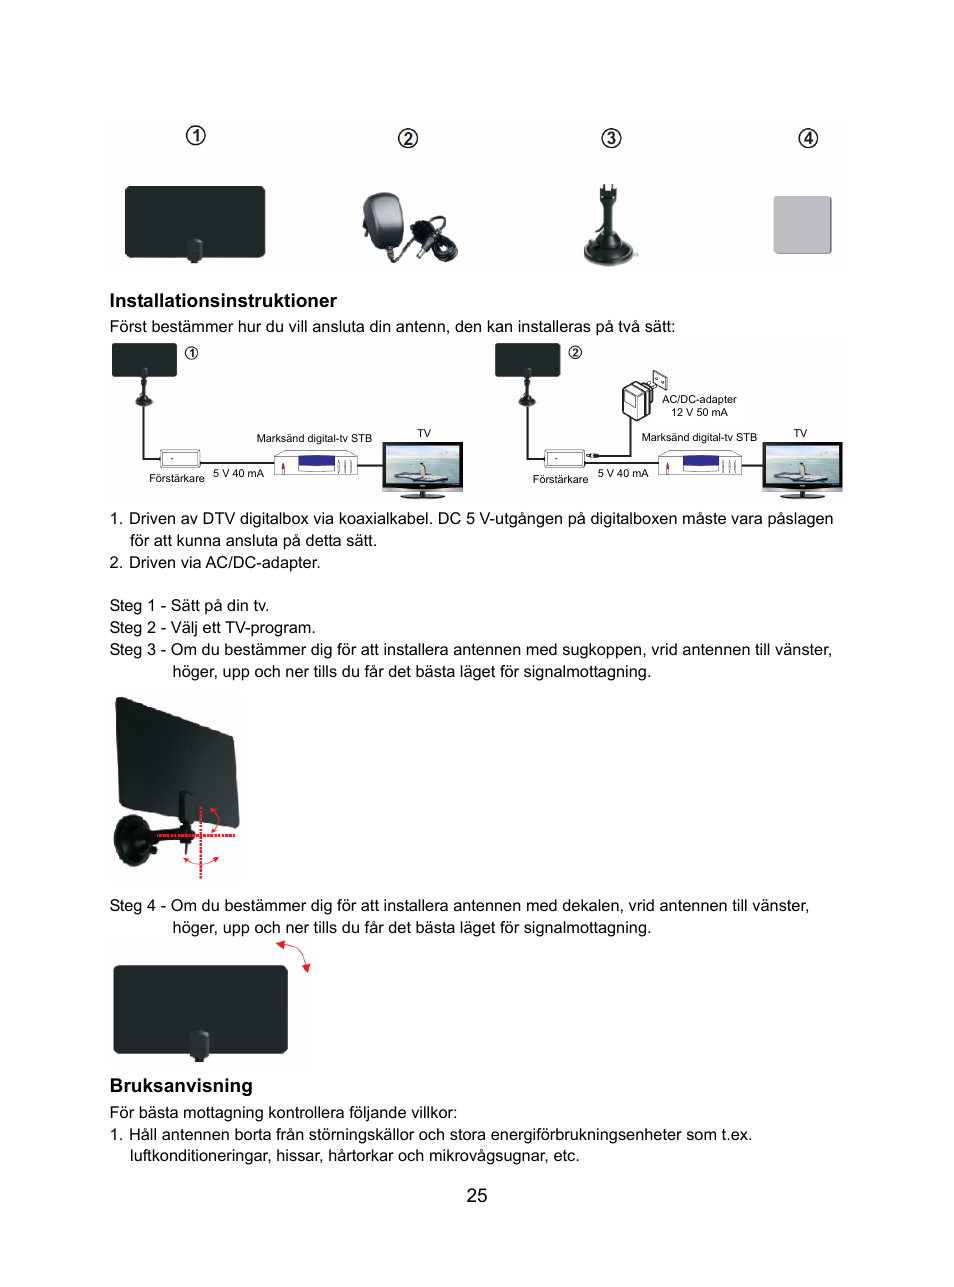 Installationsinstruktioner, Bruksanvisning | Konig Electronic DVB ...